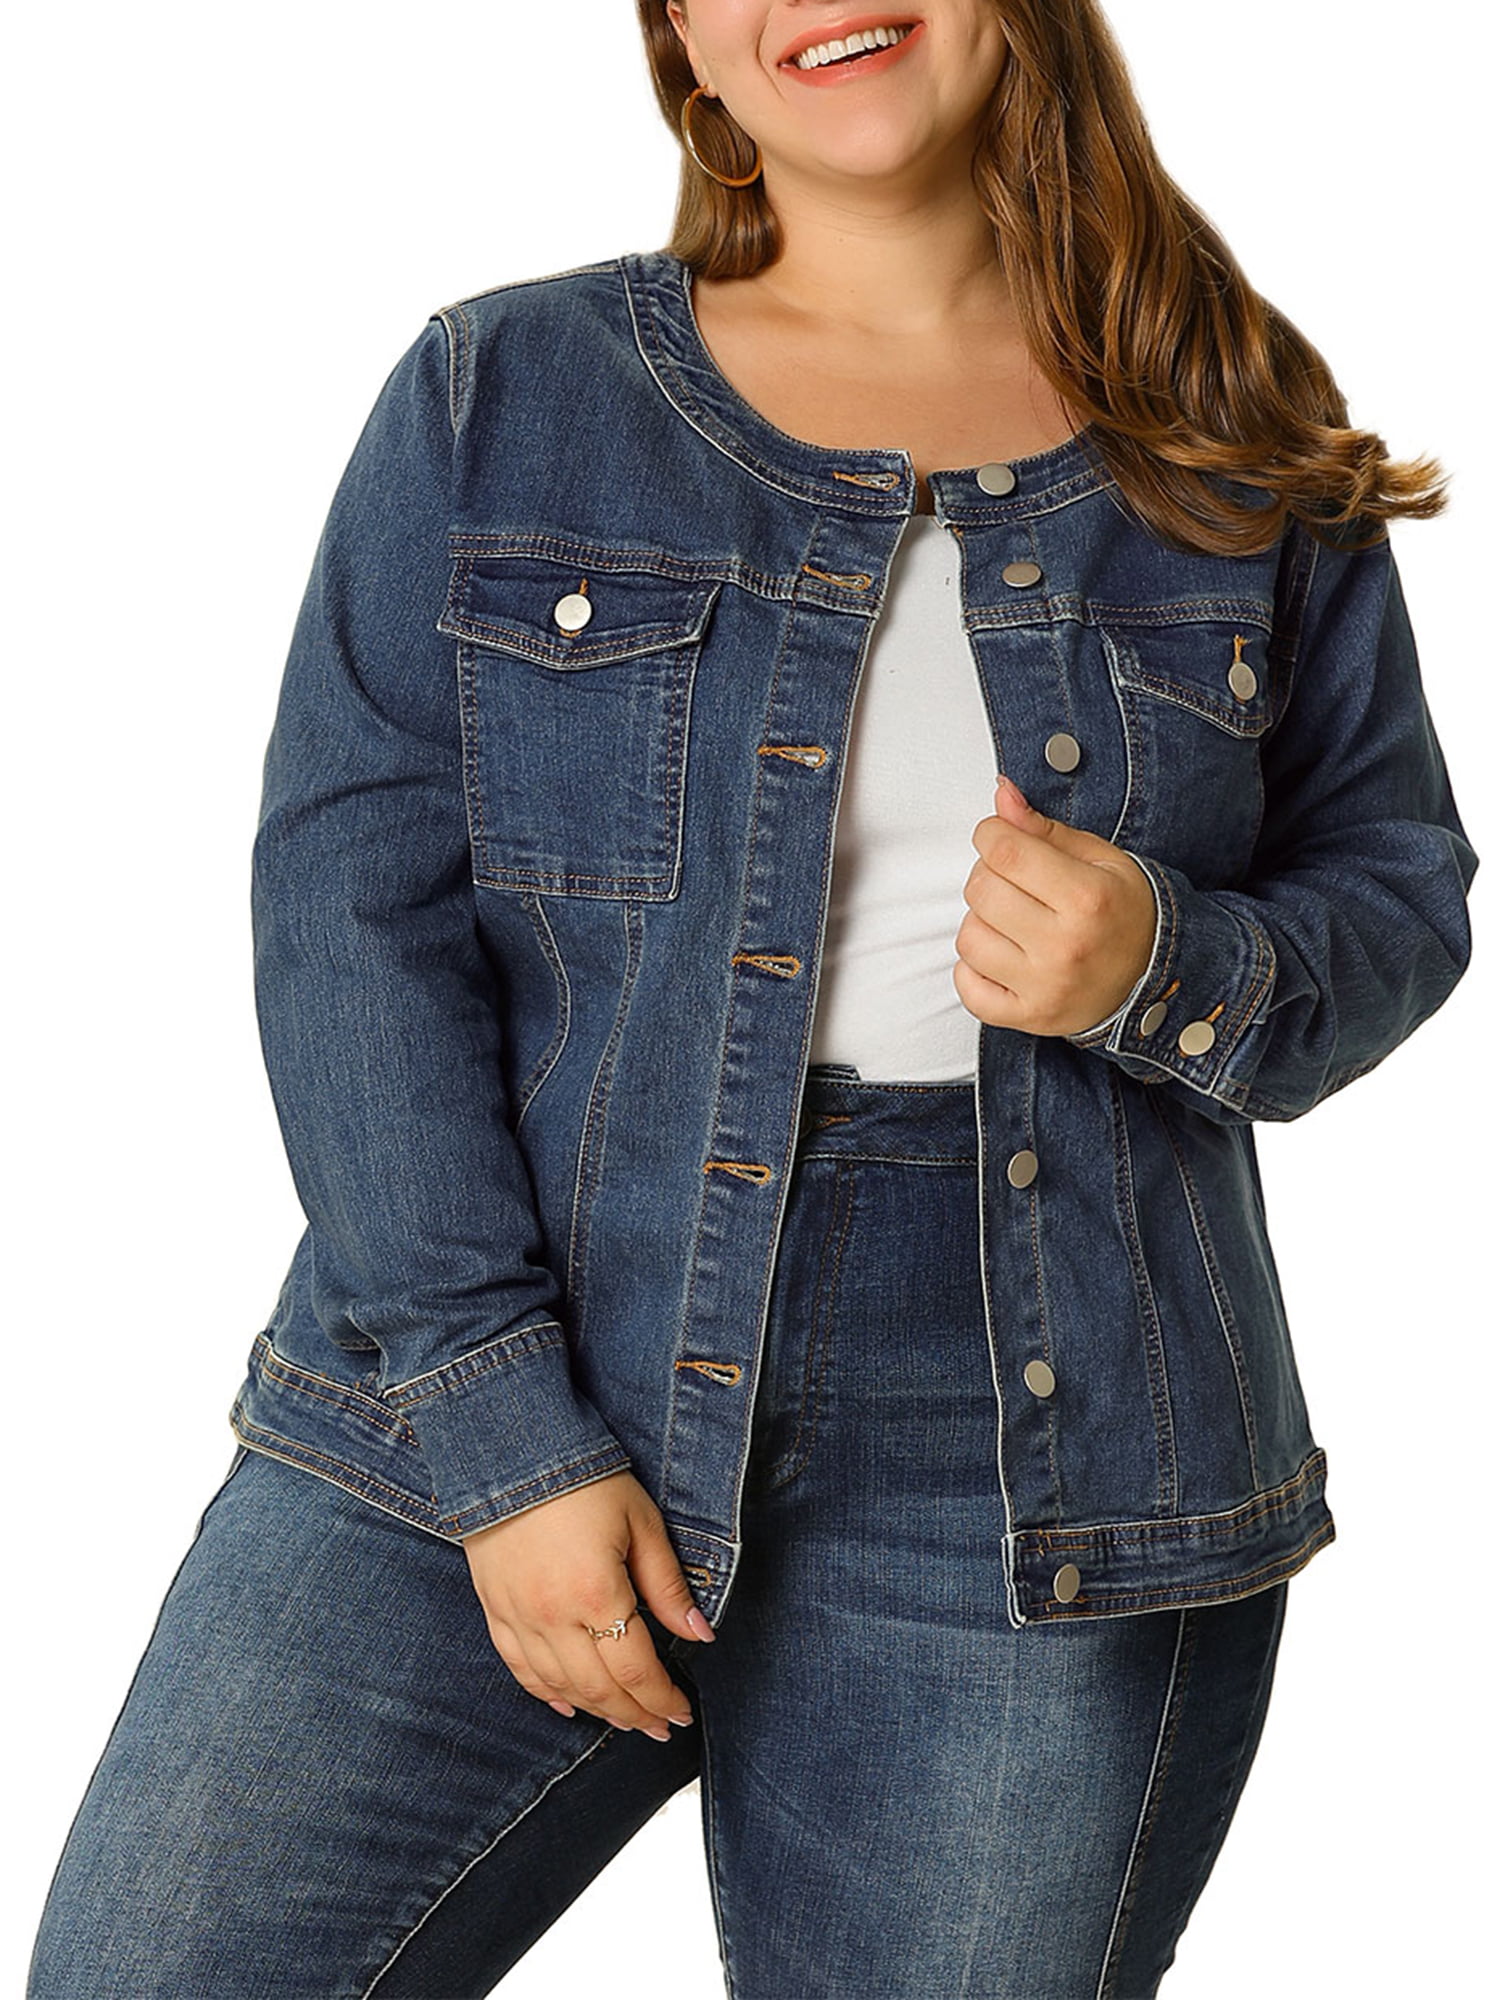 Unique Bargains - Women's Plus Size Long Sleeve Collarless Denim Jacket - Walmart.com - Walmart.com